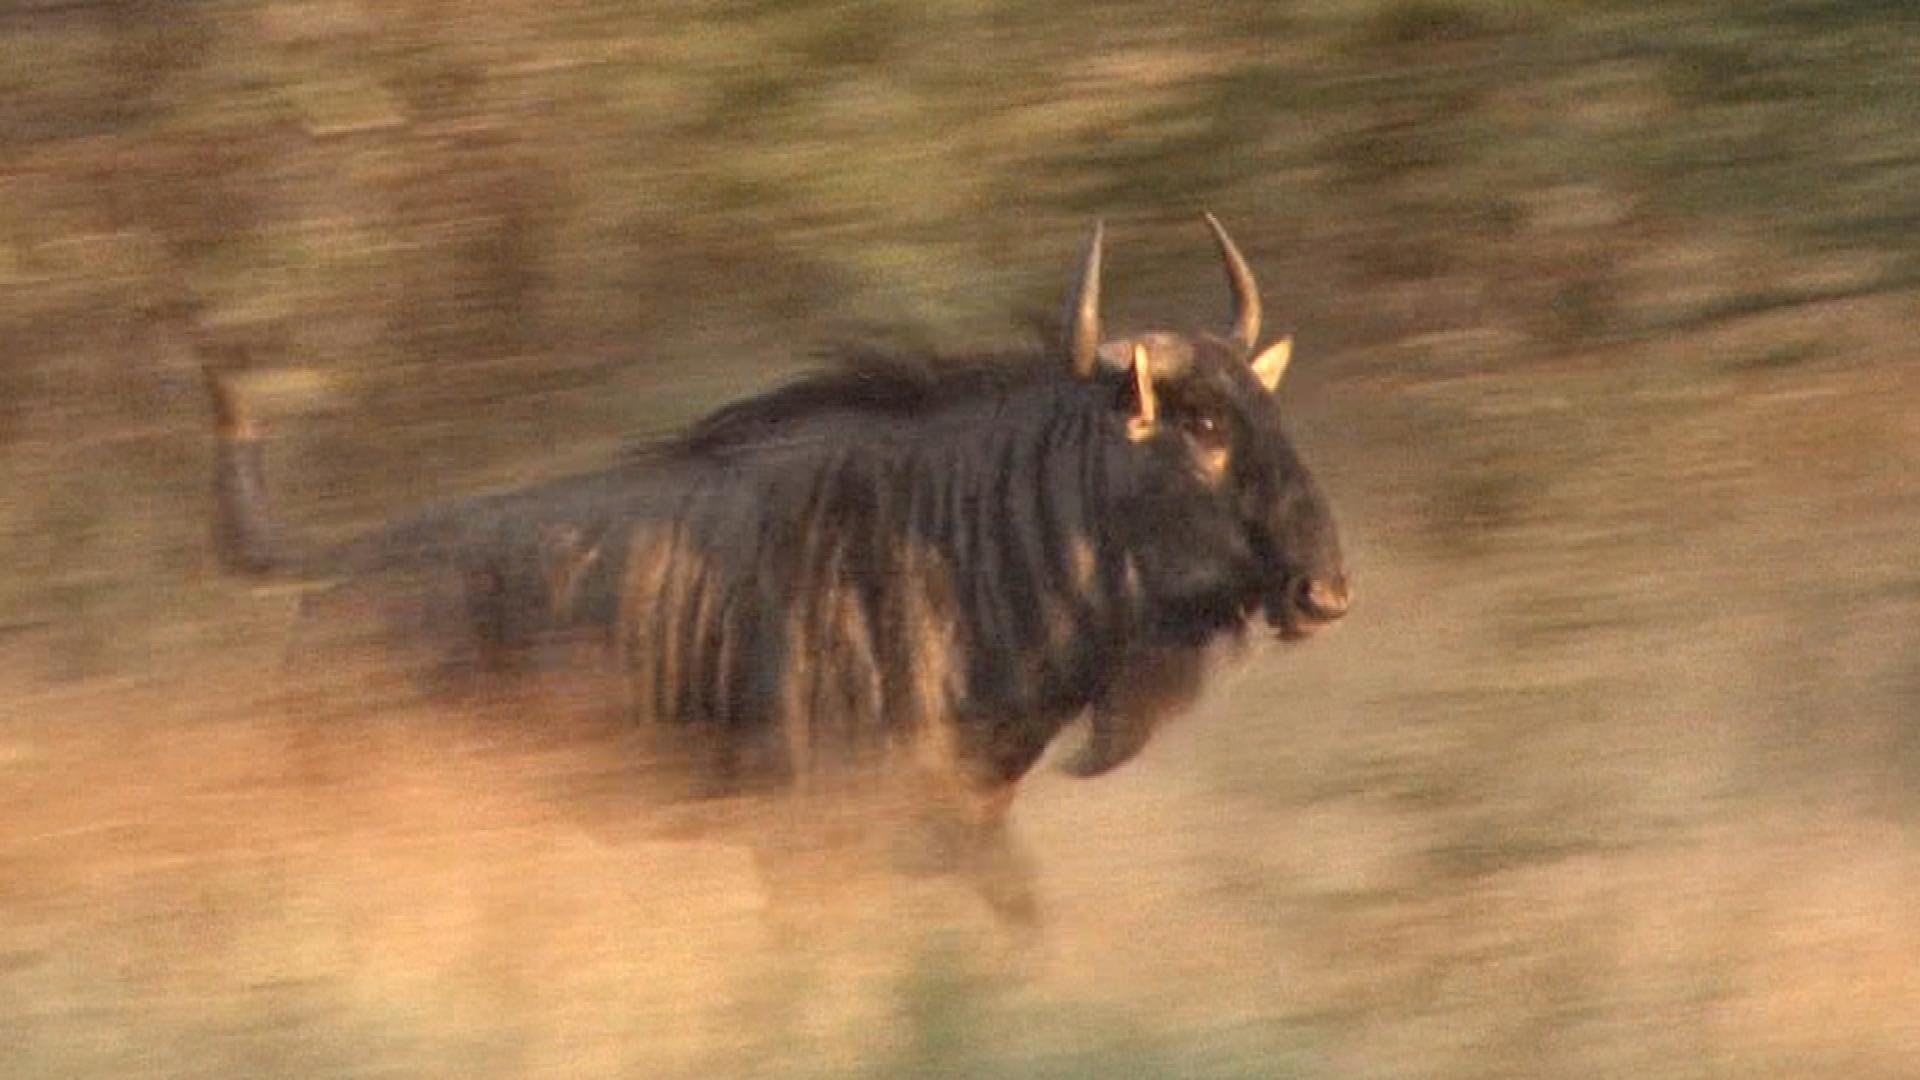 Hunting blue wildebeest